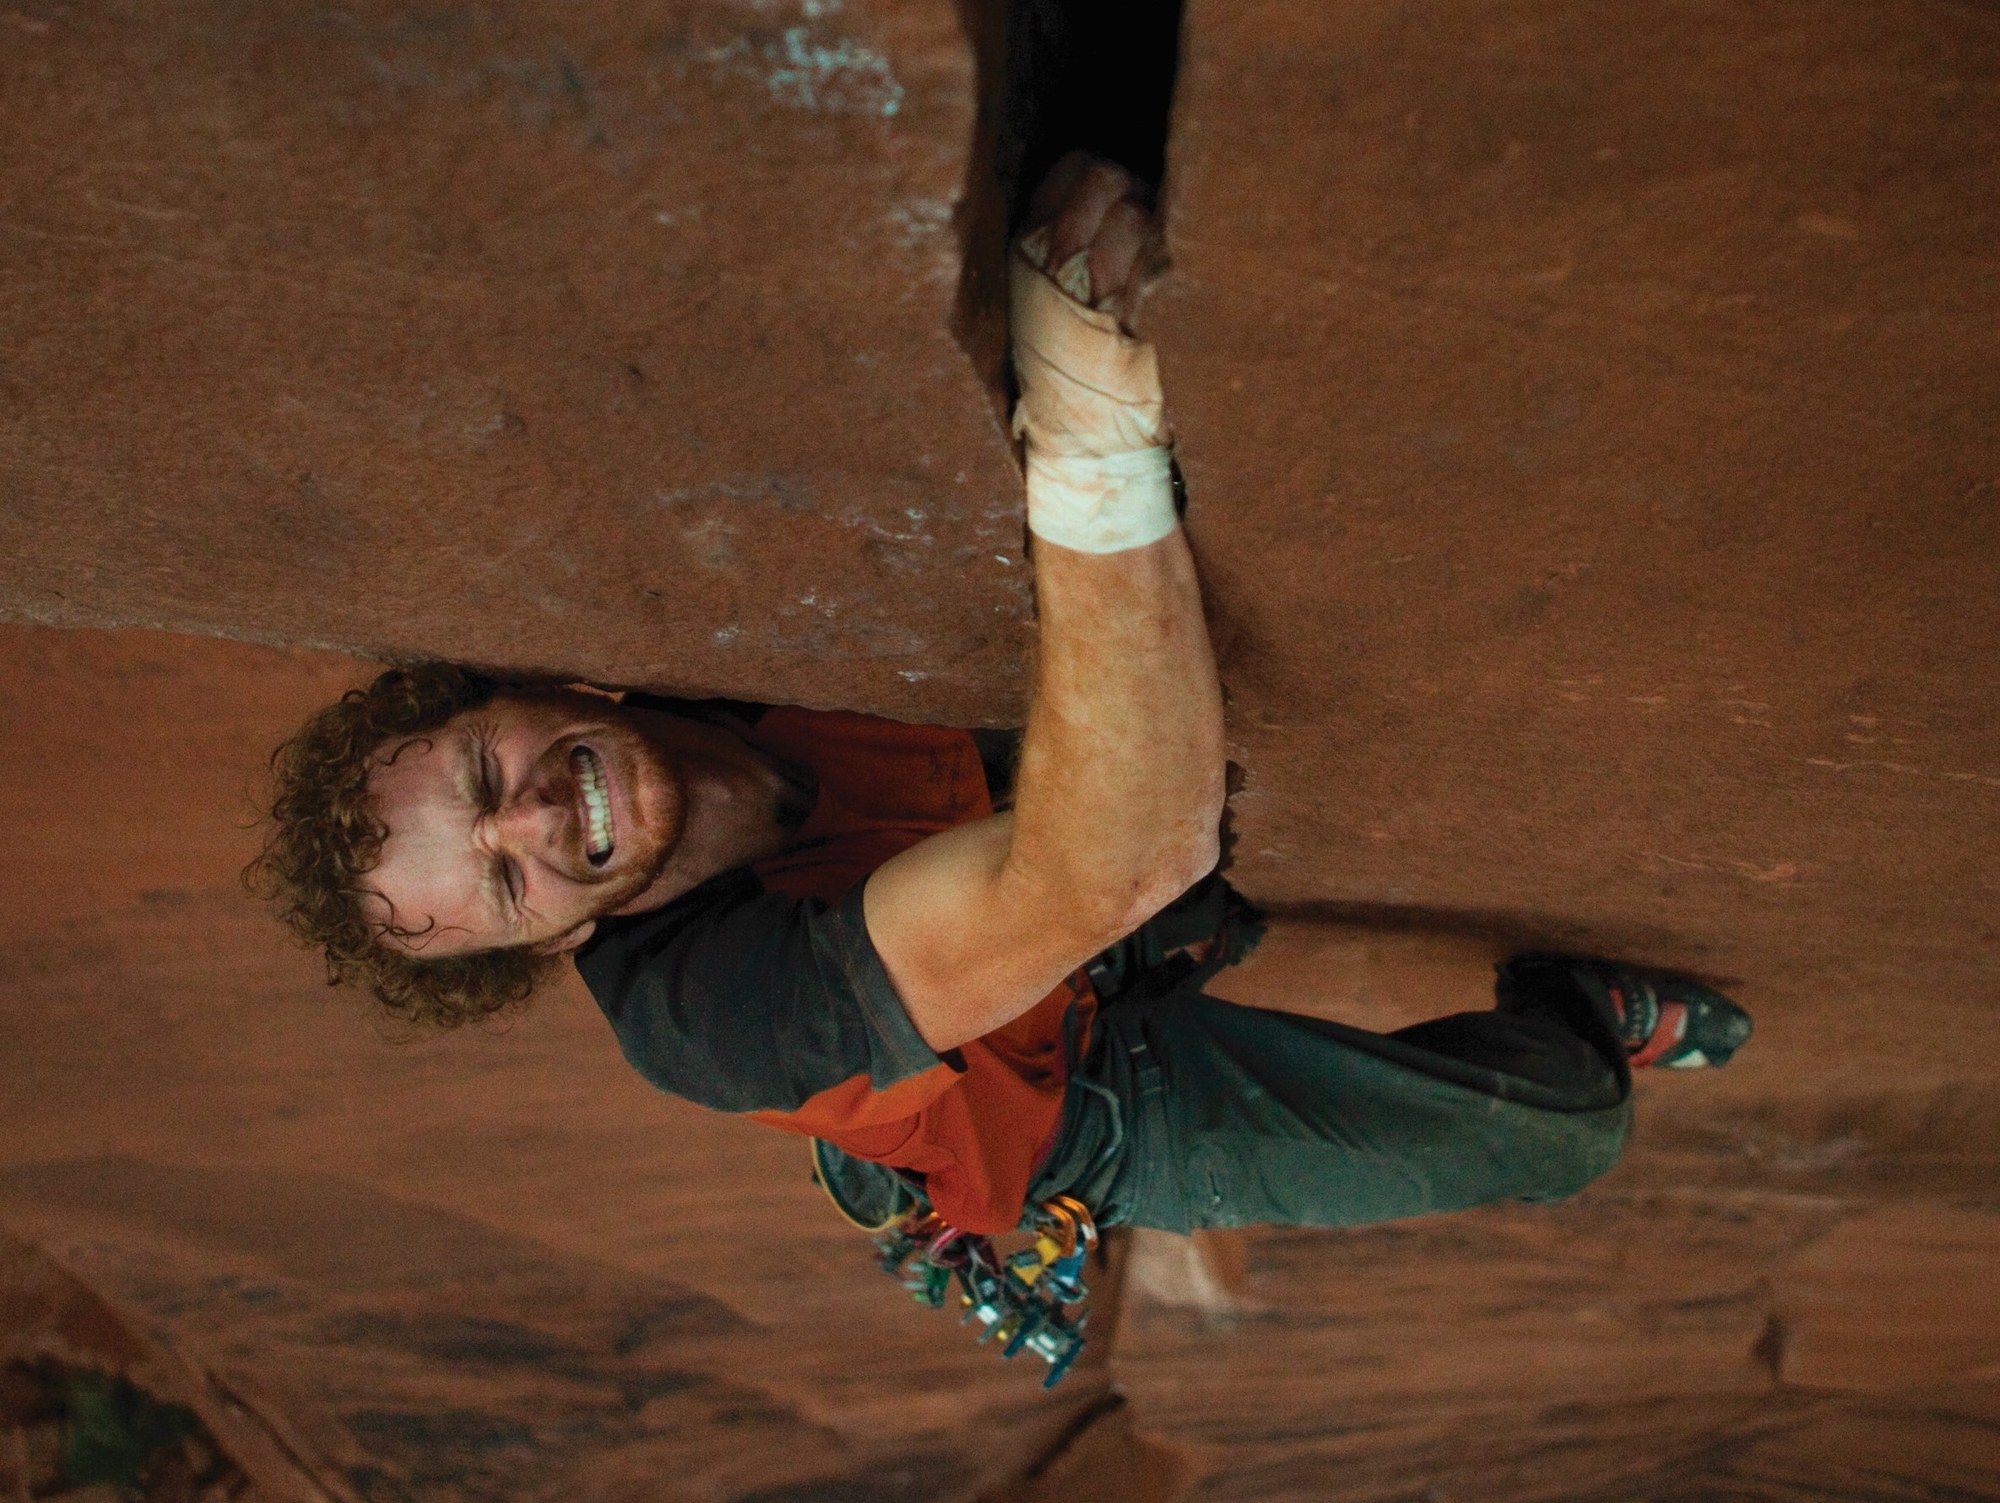 rock climber body type